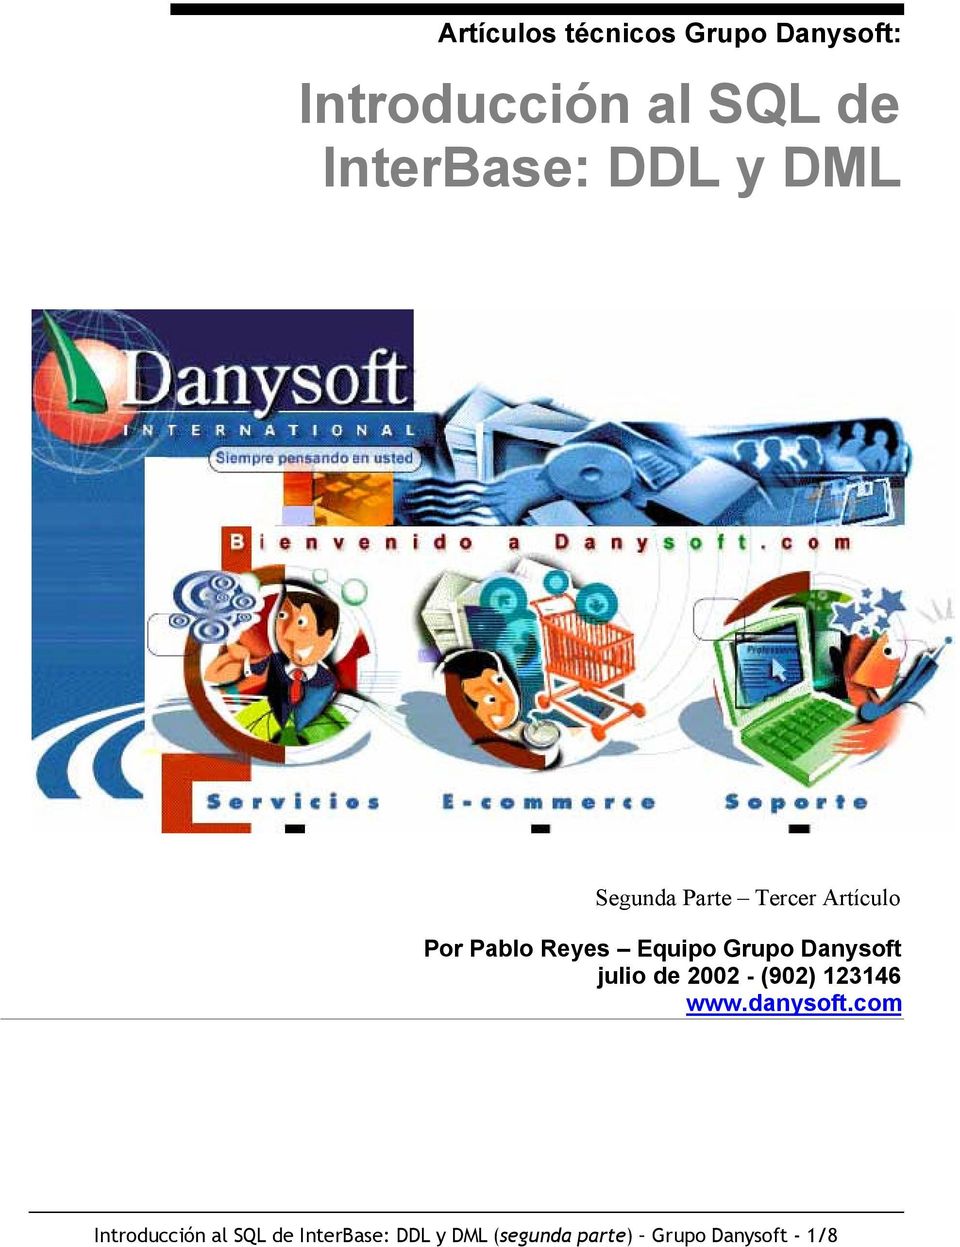 Danysoft julio de 2002 - (902) 123146 www.danysoft.